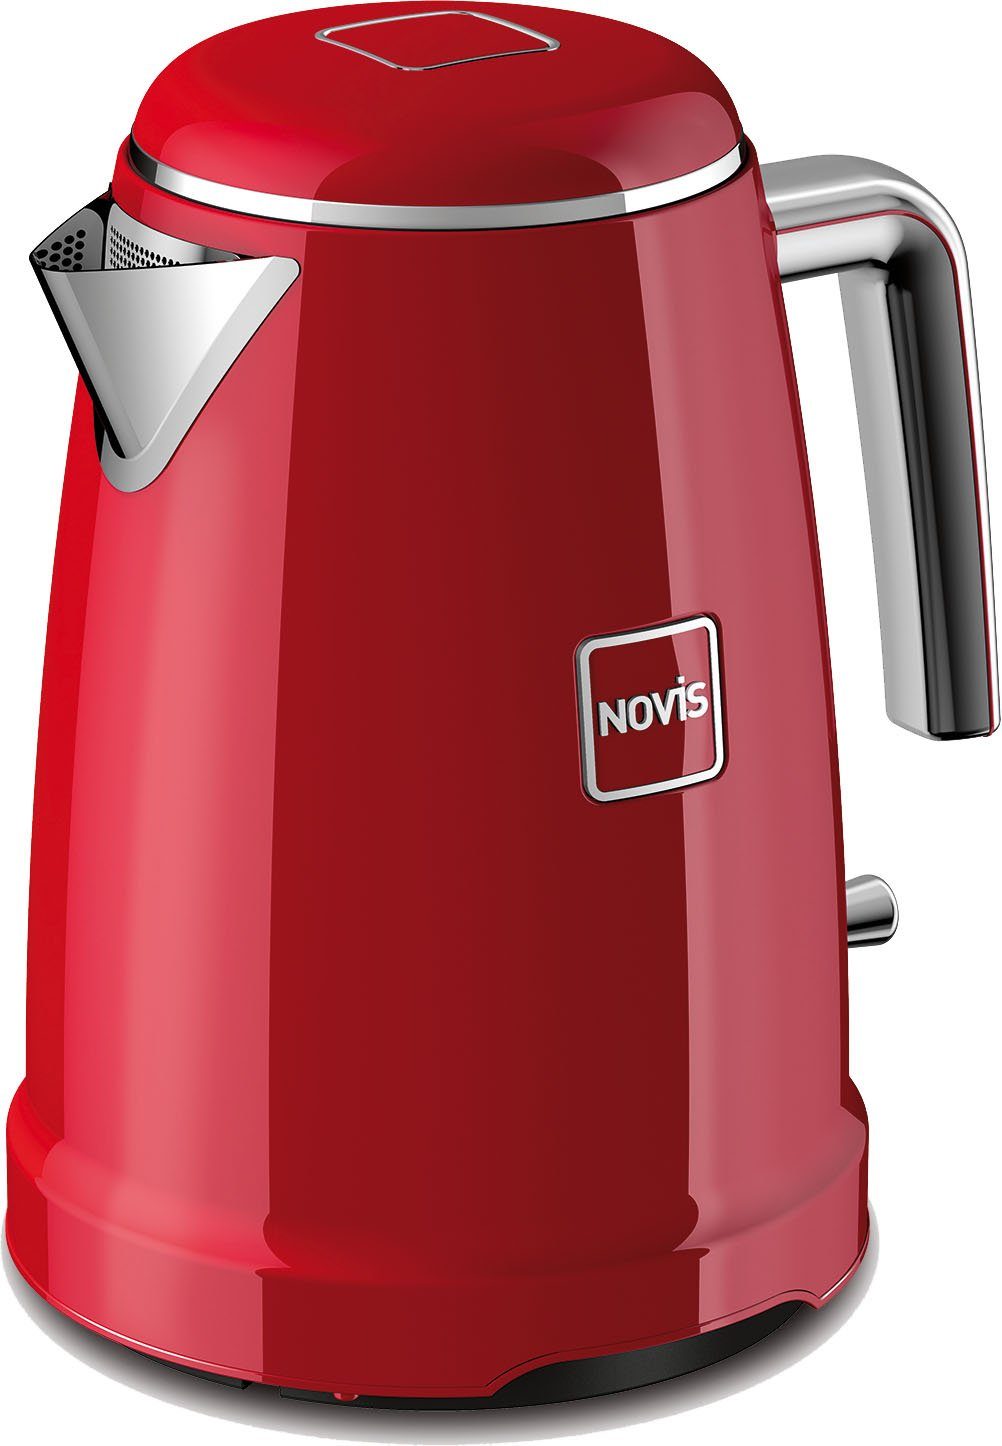 NOVIS Wasserkocher K1 rot, 1,6 l, 2400 W, Metallgehäuse